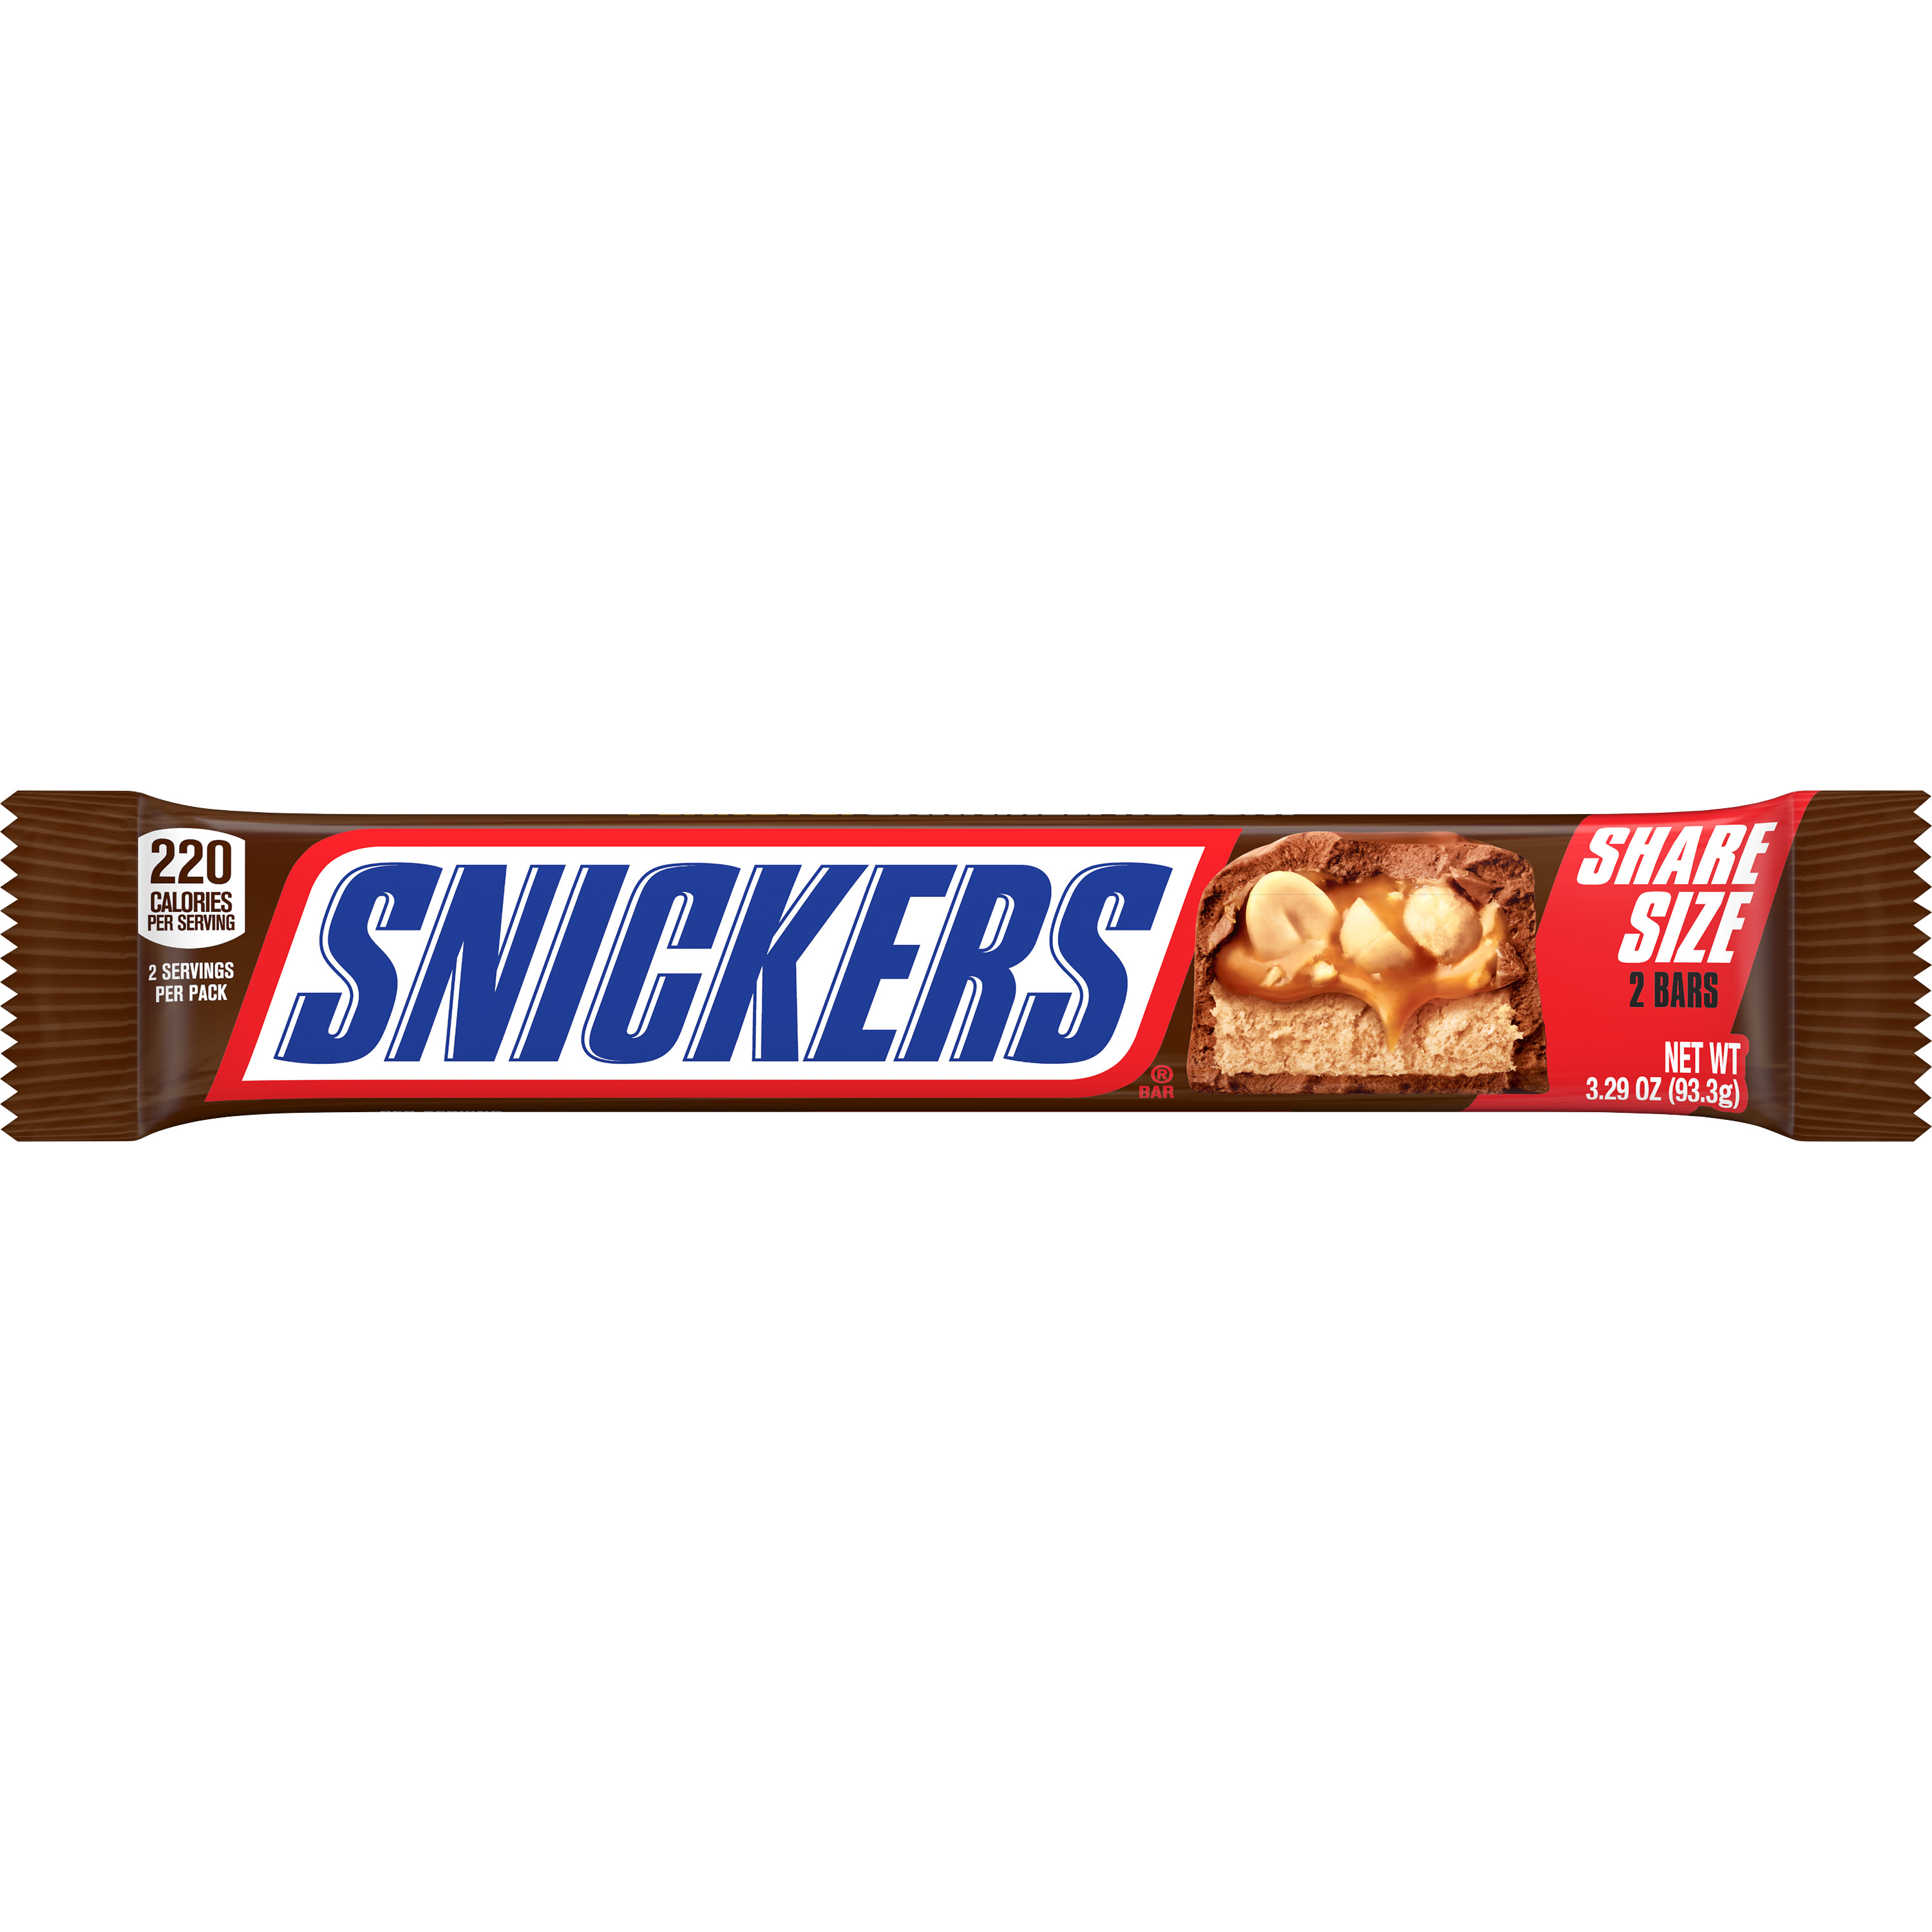 Snickers Milk Chocolate Candy Bars, Share Size - 3.29 oz - Walmart.com